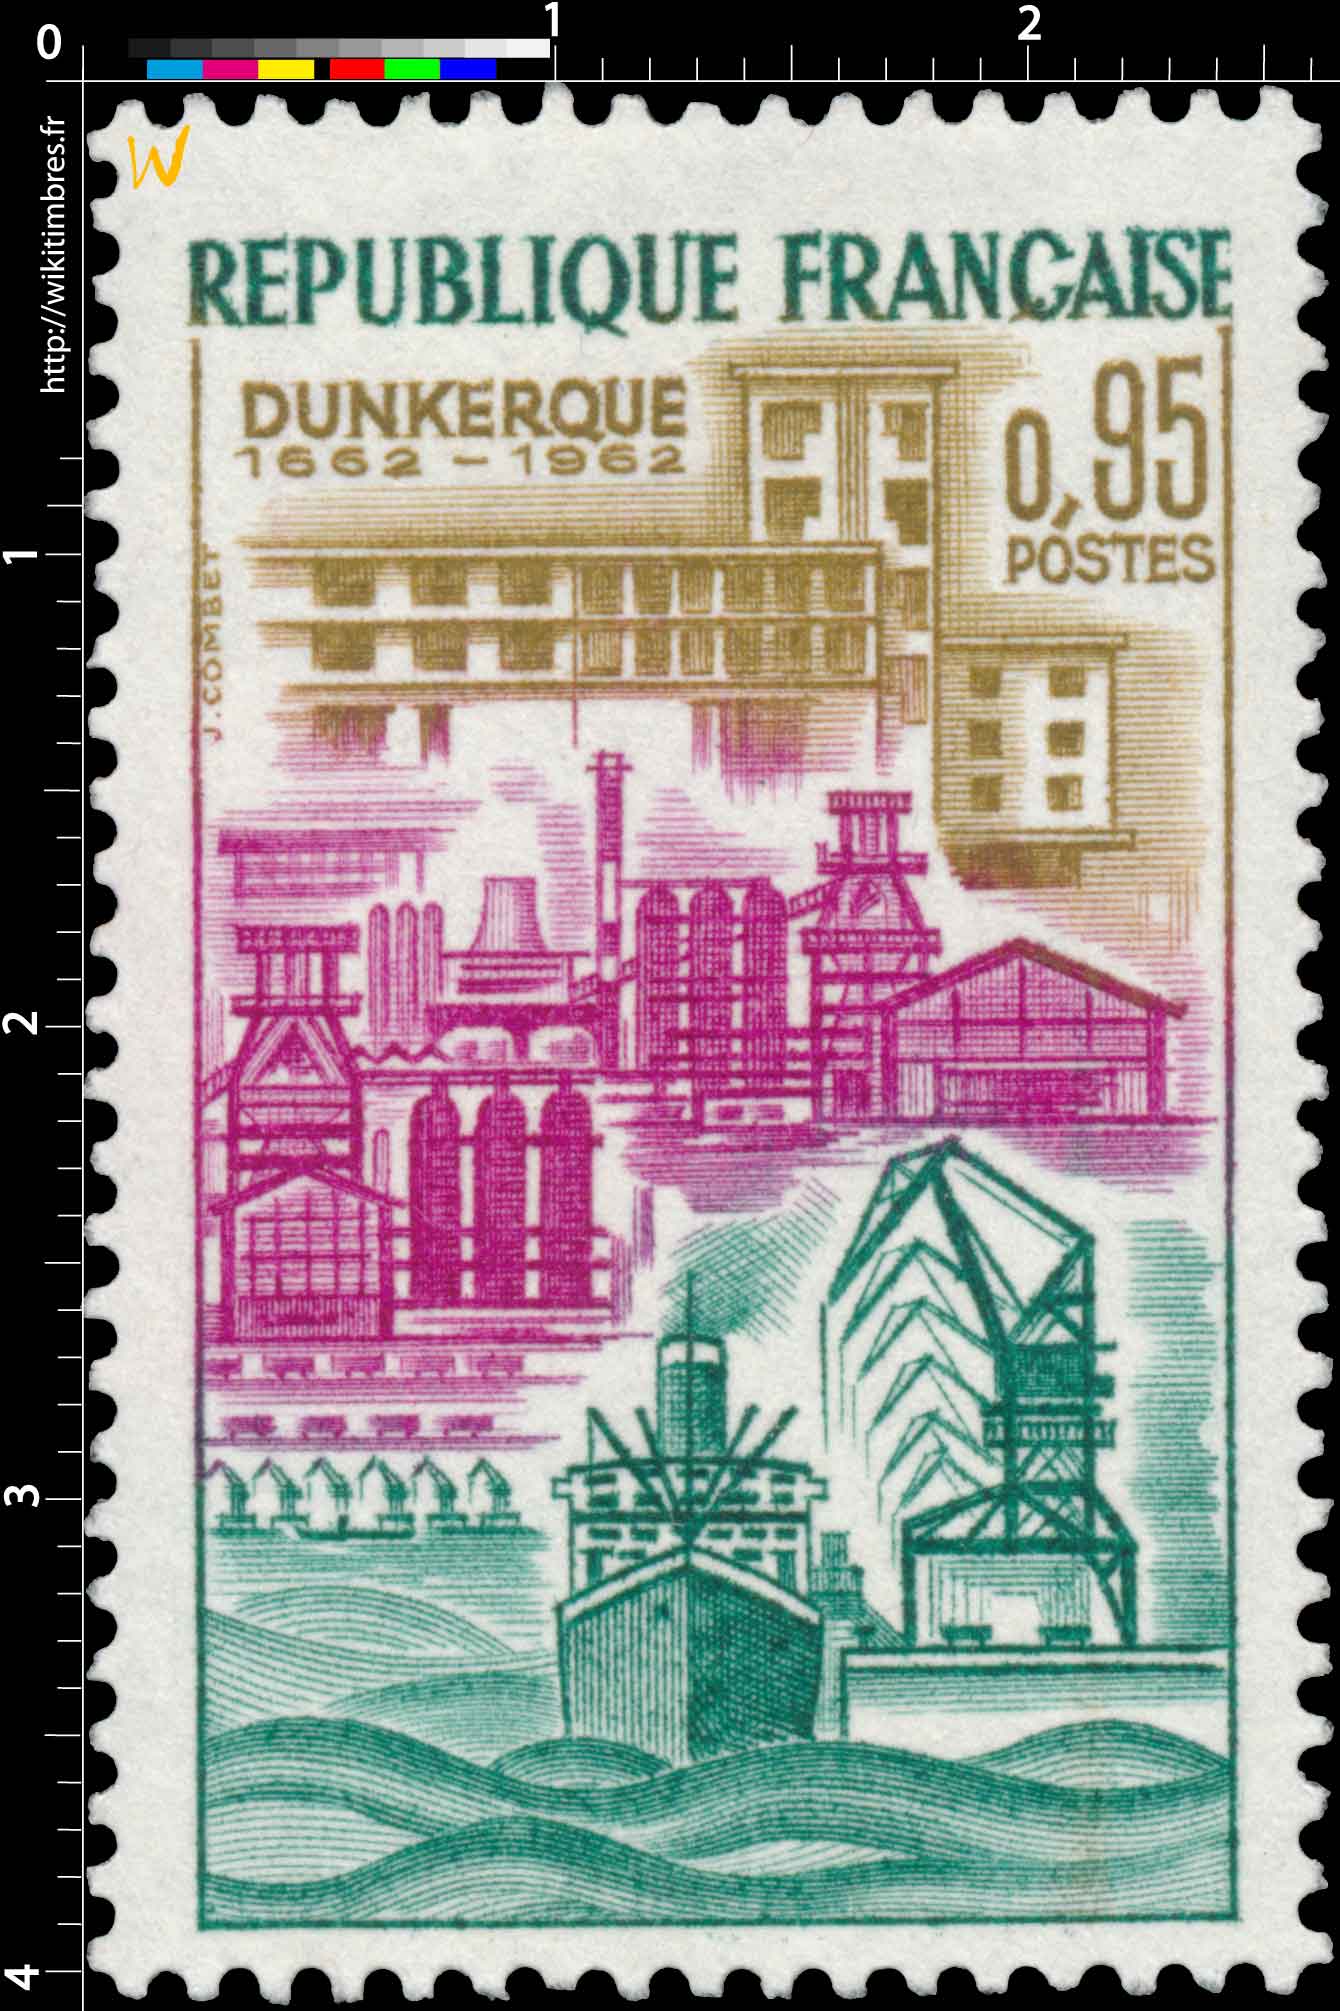 DUNKERQUE 1662-1962